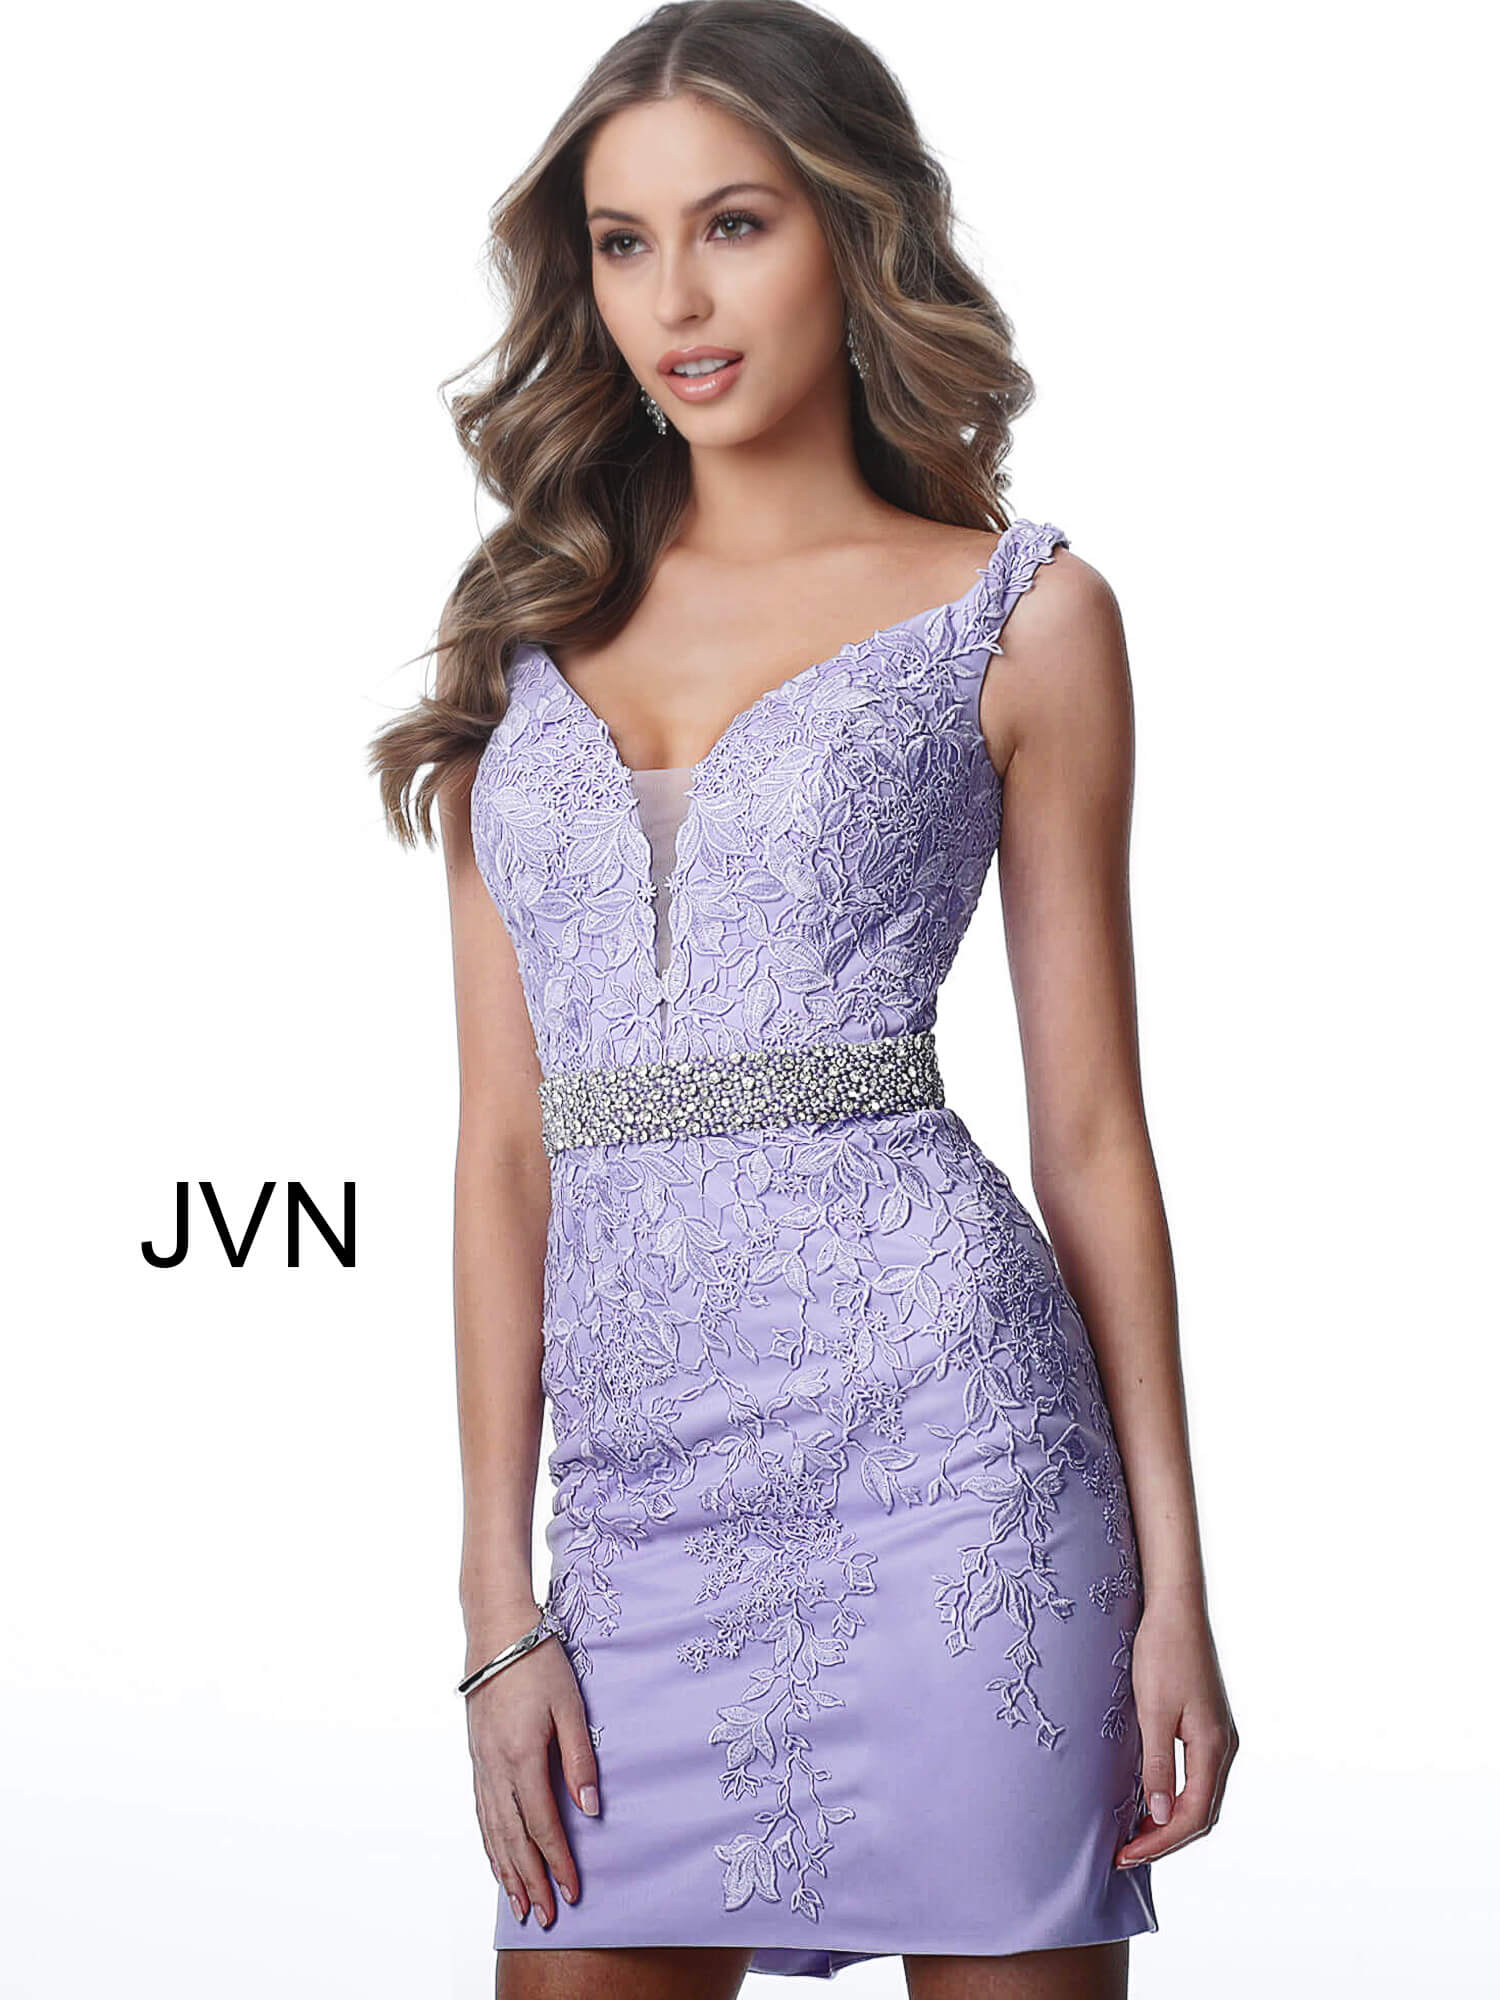 JVN1102 Dress| Emerald short fitted floral lace belt homecoming dress